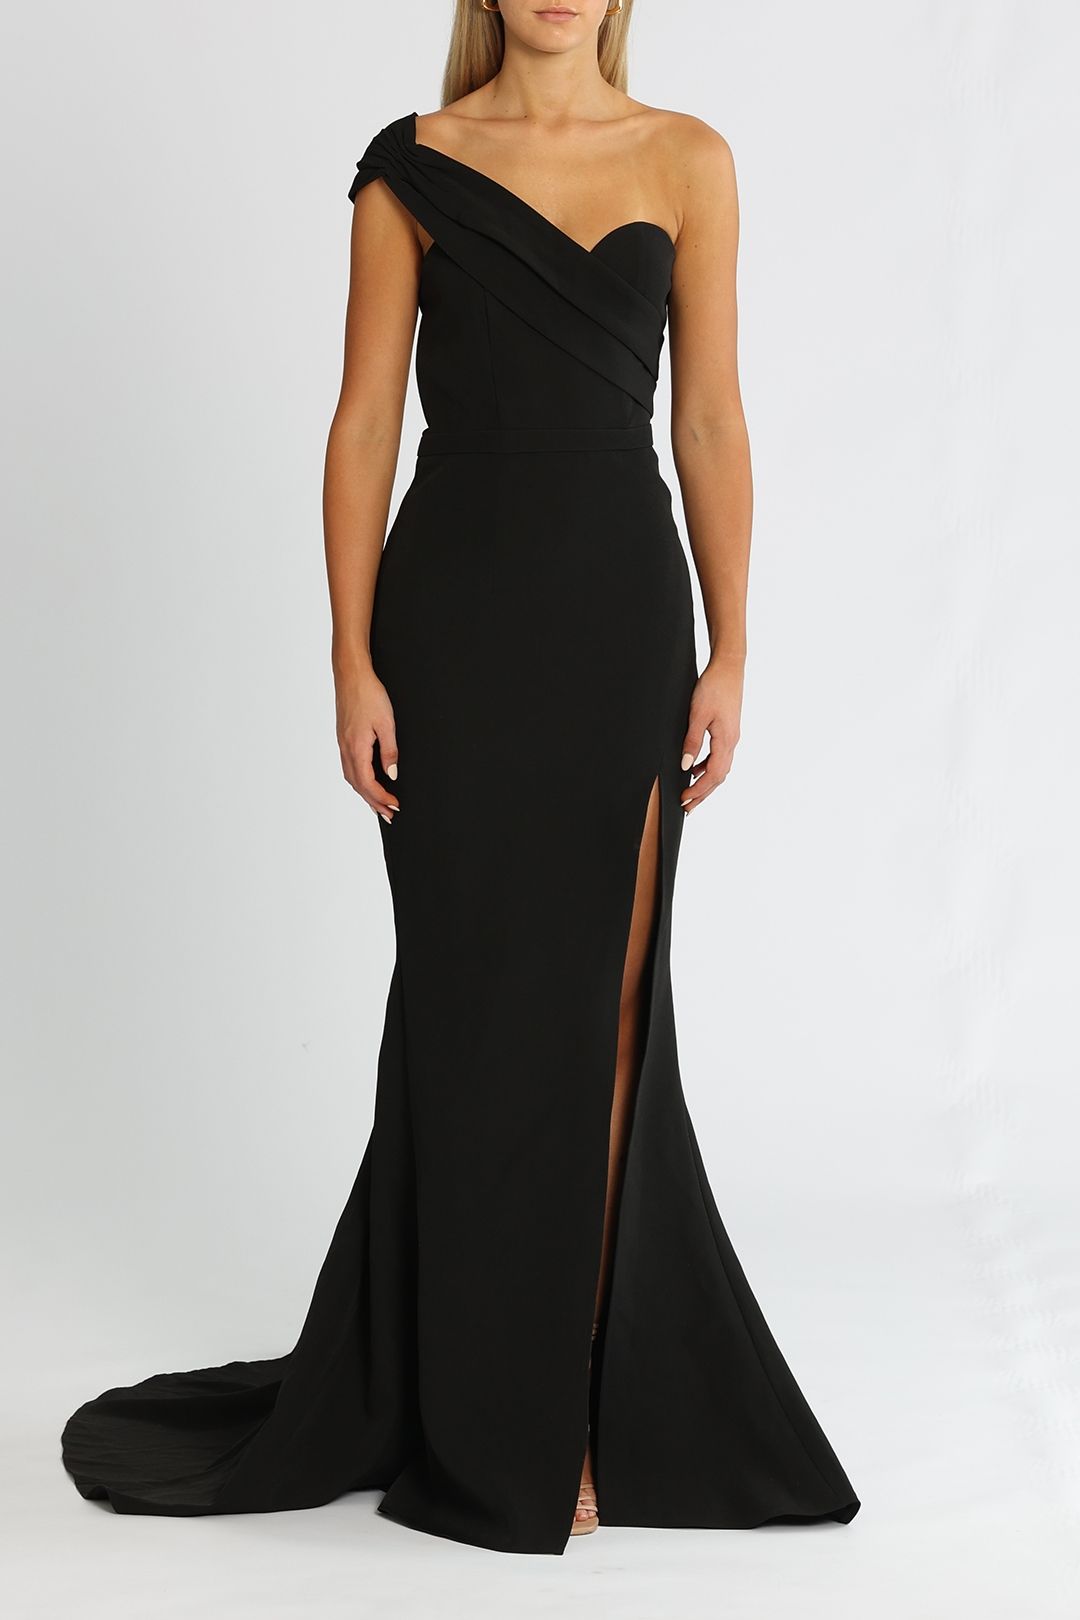 Hire Designer Black Tie Dresses & Gowns | GlamCorner